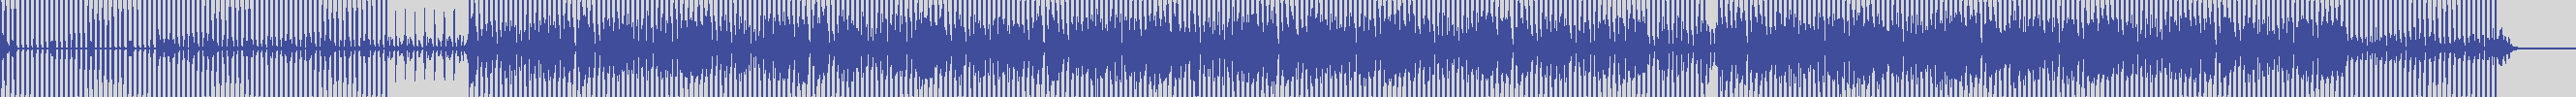 atomic_recordings [AR008] Jeff Jackson - Watcha Gonna Do [Original Mix] audio wave form